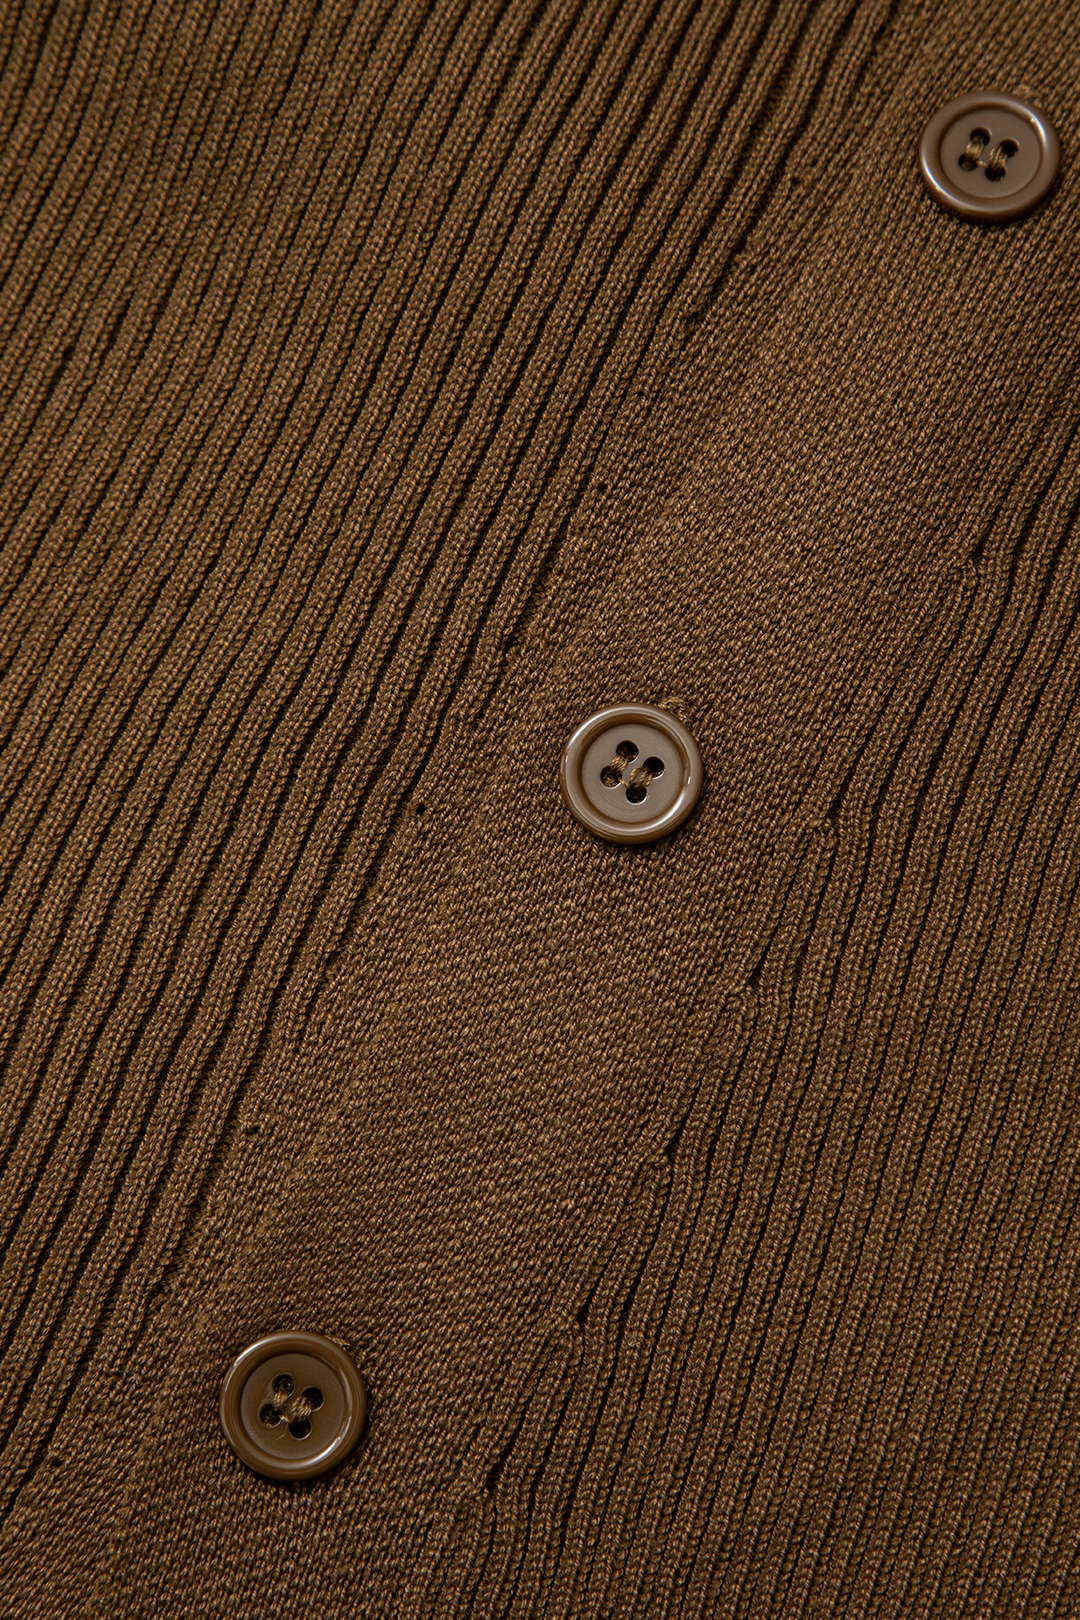 Asymmetrical Button Up Long Sleeve Knit Top